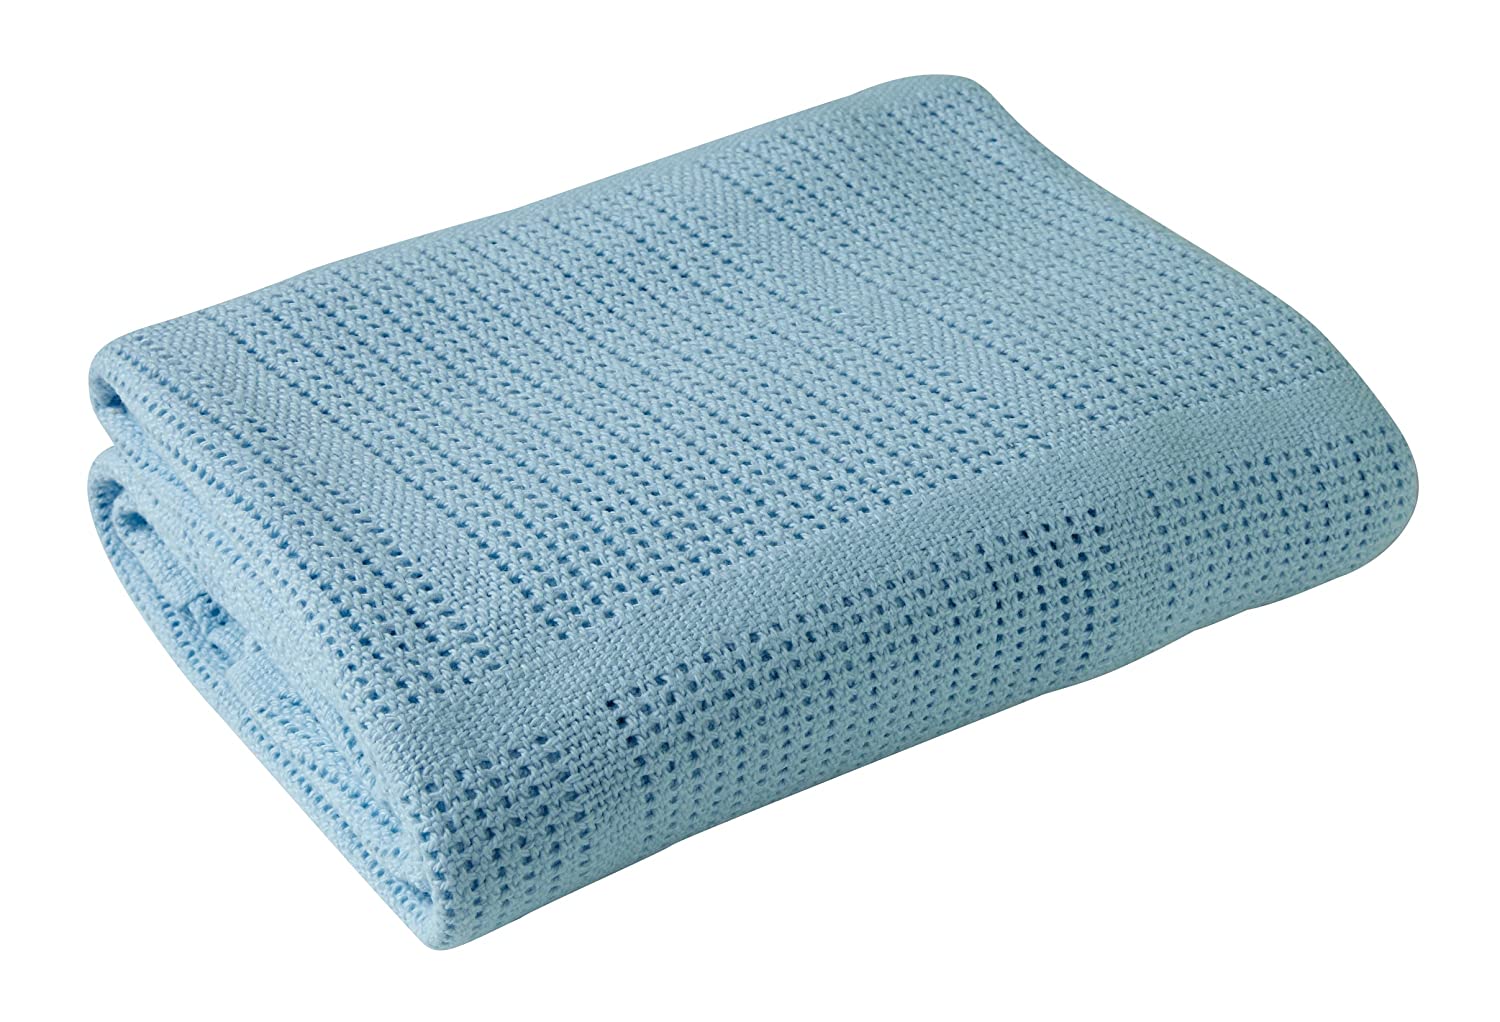 Clair De Lune Cot Bed Flat Sheet, Cot/Cot Extra Soft Cotton Cellular Blanke